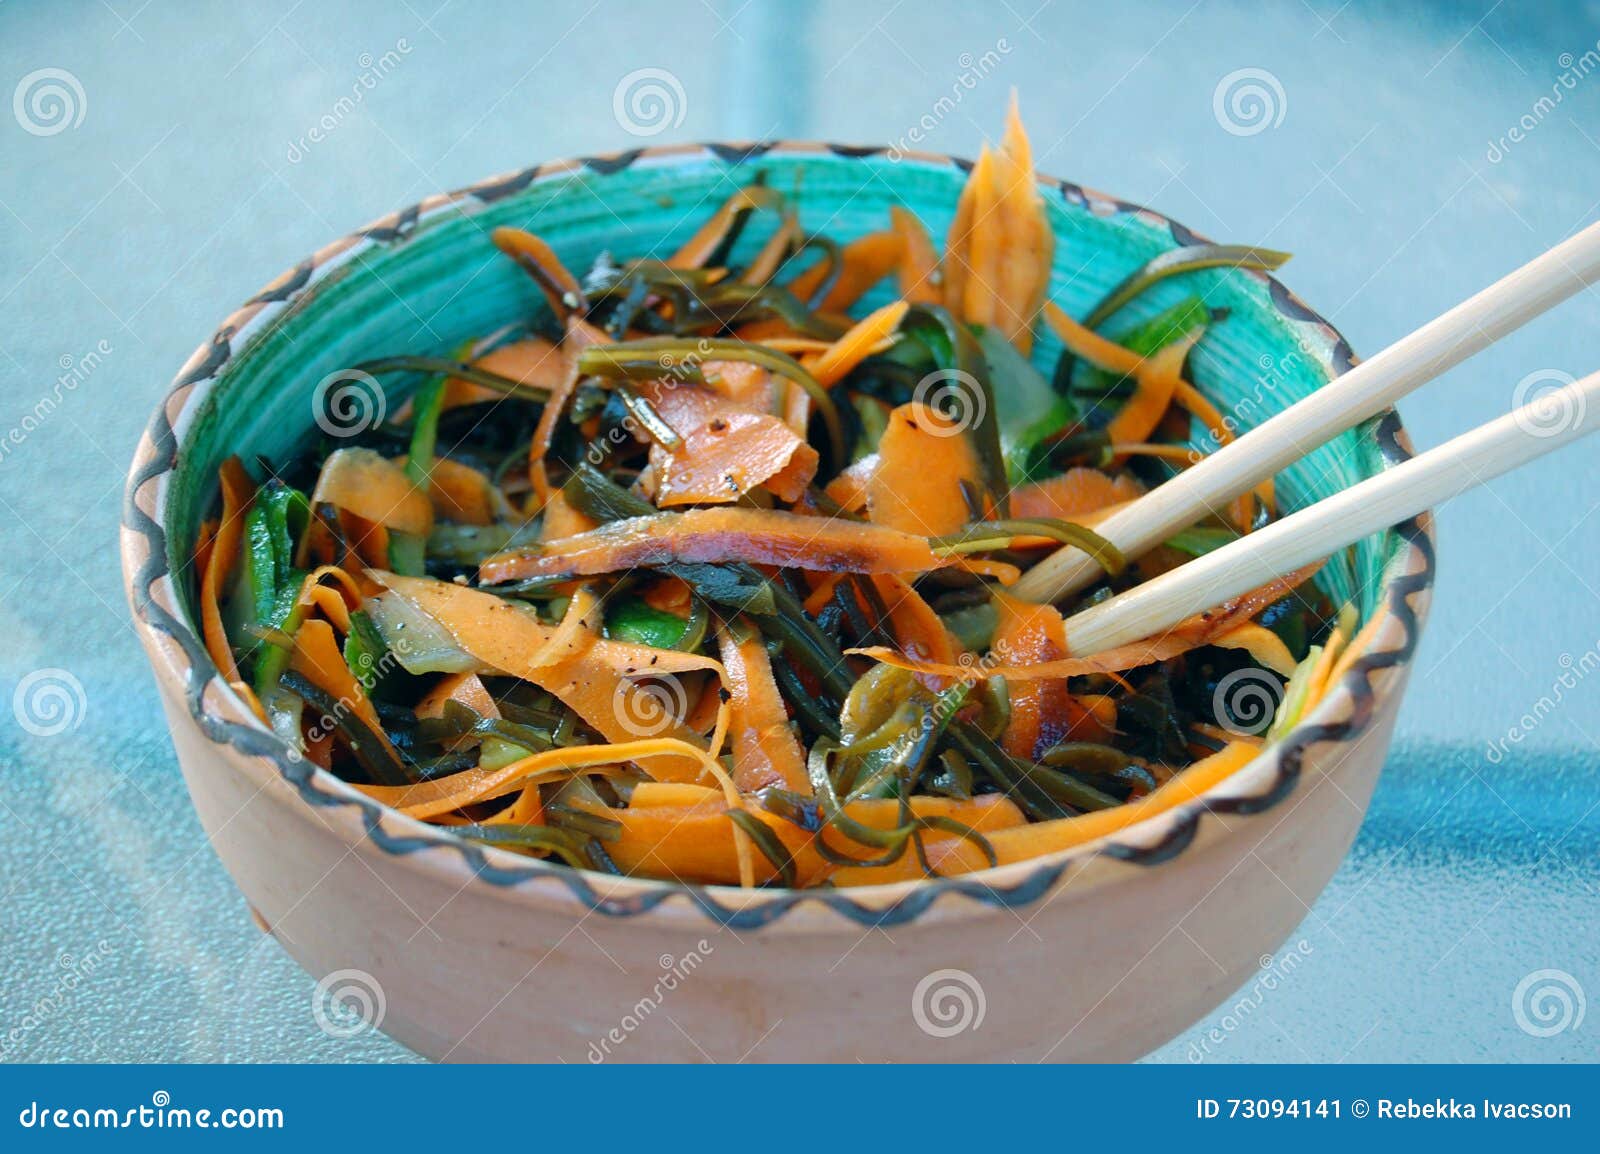 https://thumbs.dreamstime.com/z/kelp-noodles-salad-carrot-cucumber-soy-sauce-ans-wasab-wasabi-ceramic-bowl-73094141.jpg